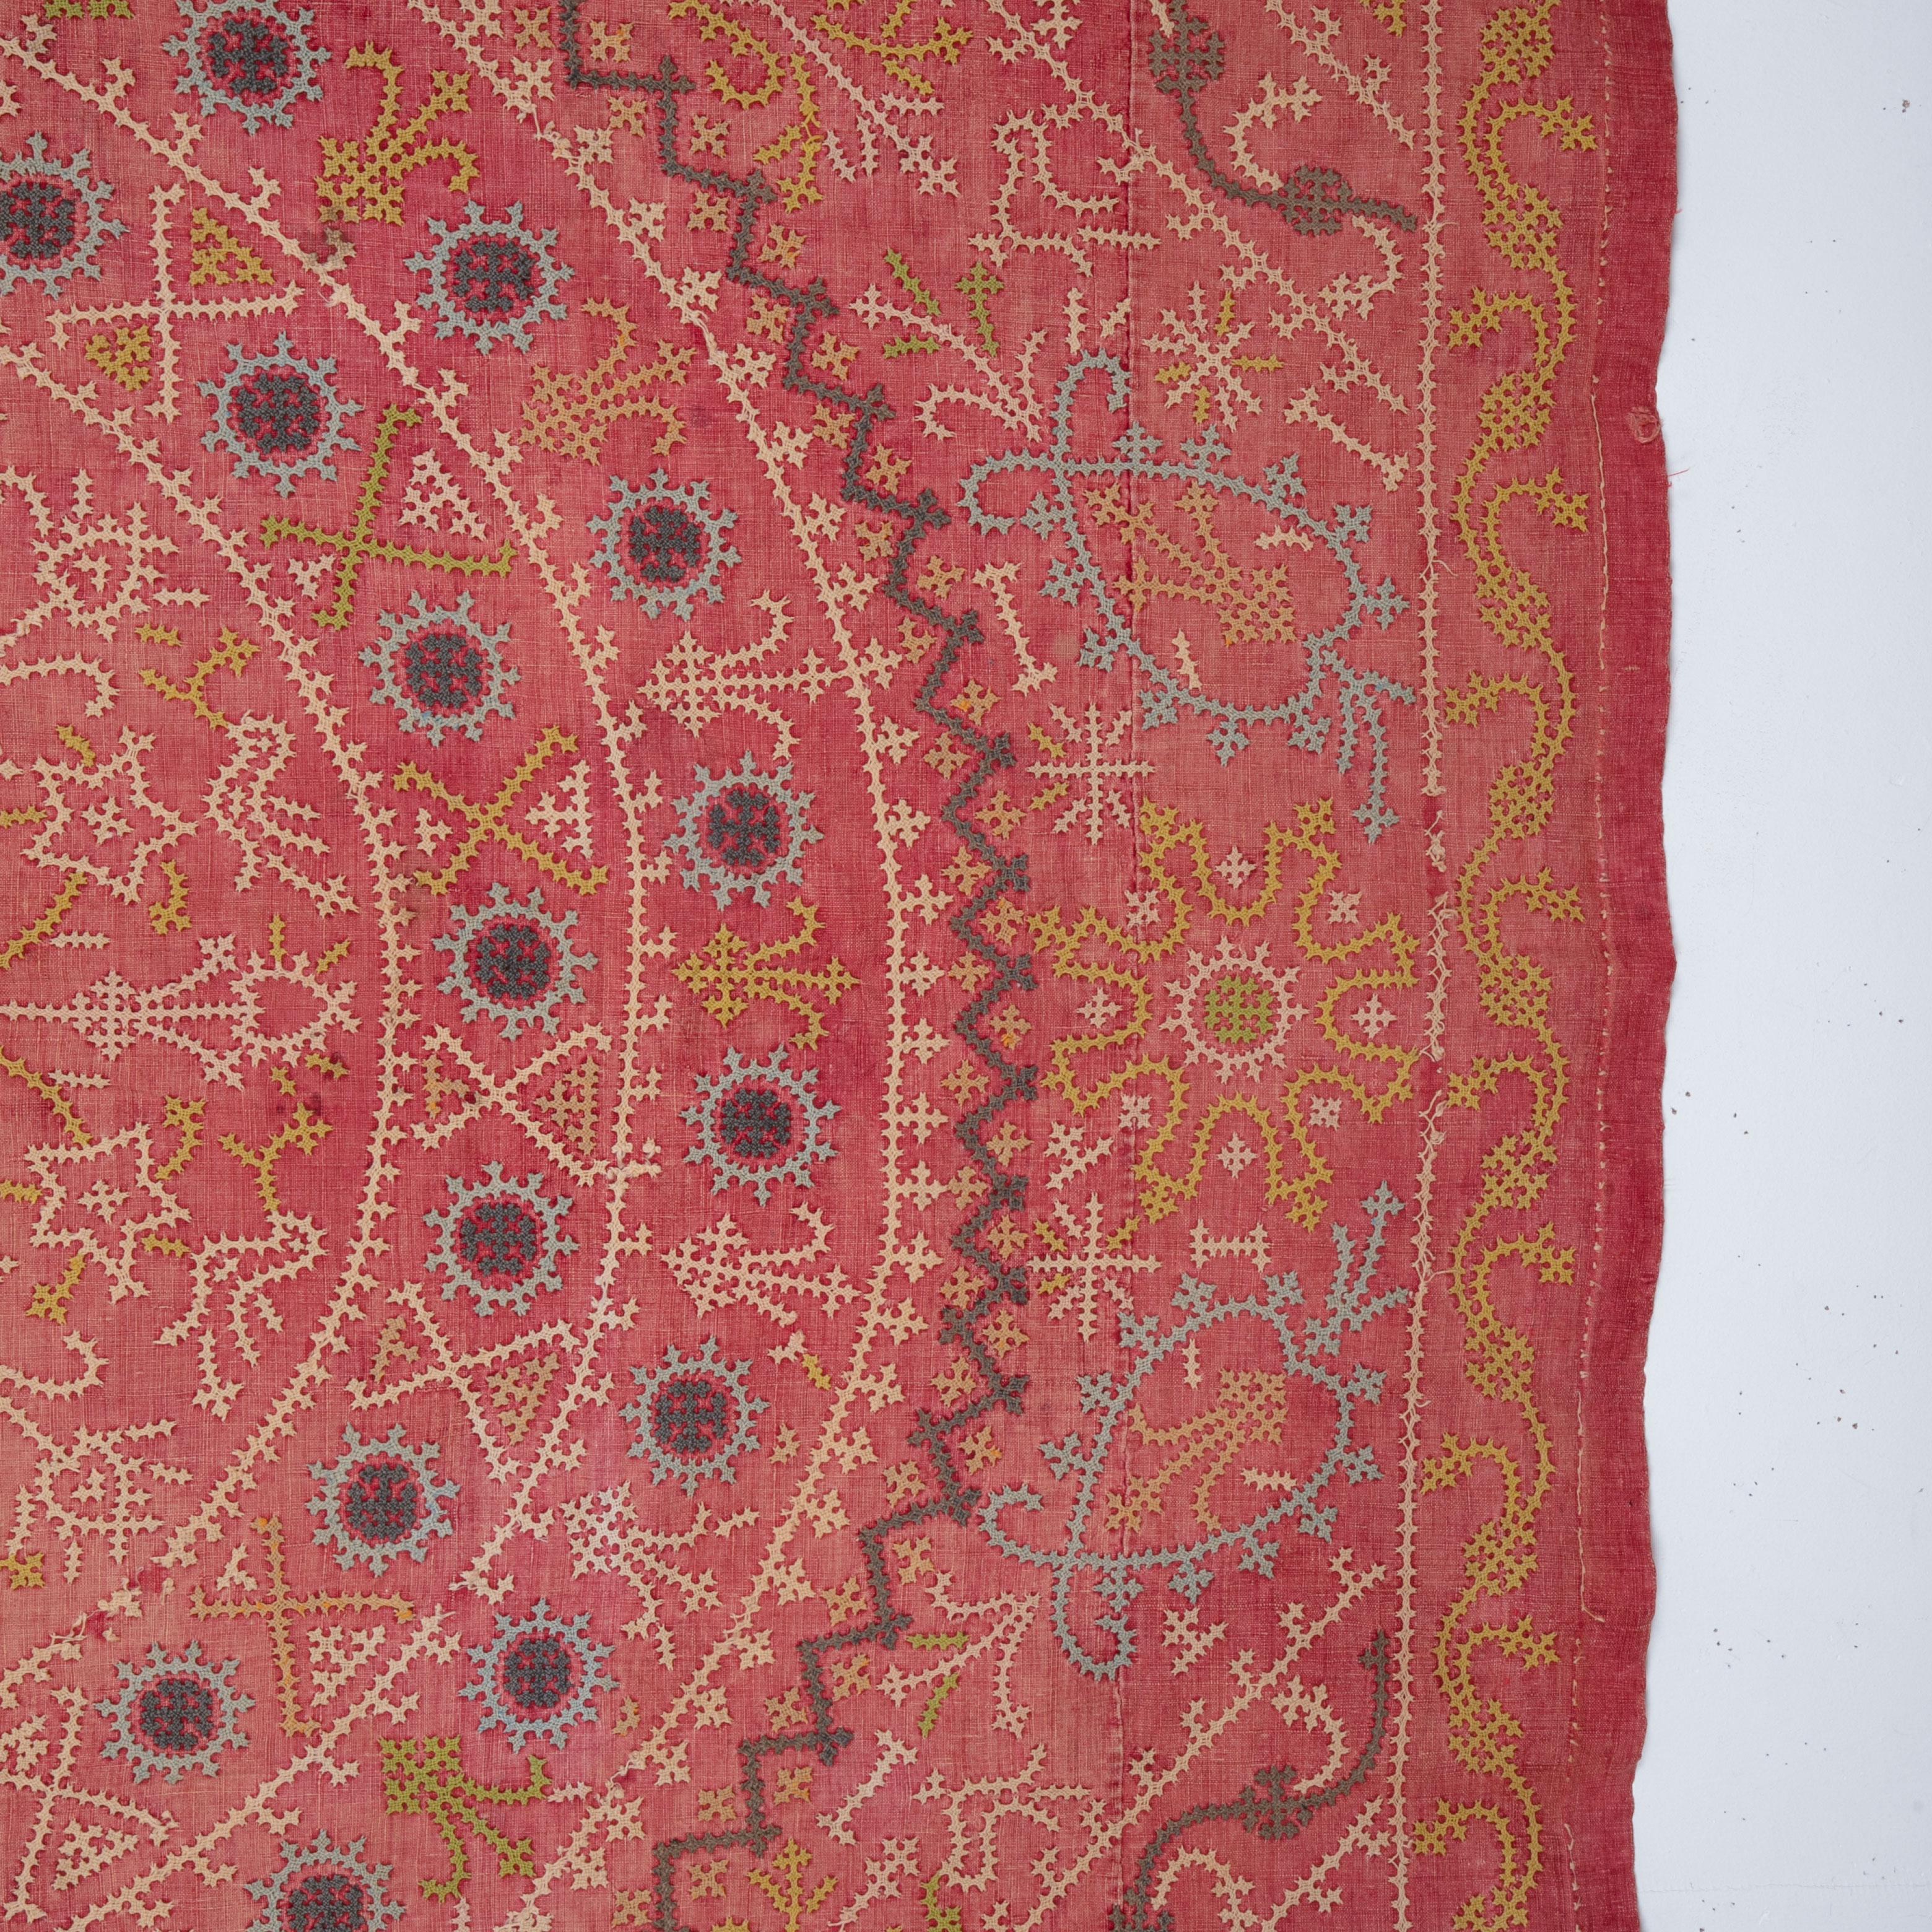 Suzani Armenian Marash Embroidery, Late 19th Century